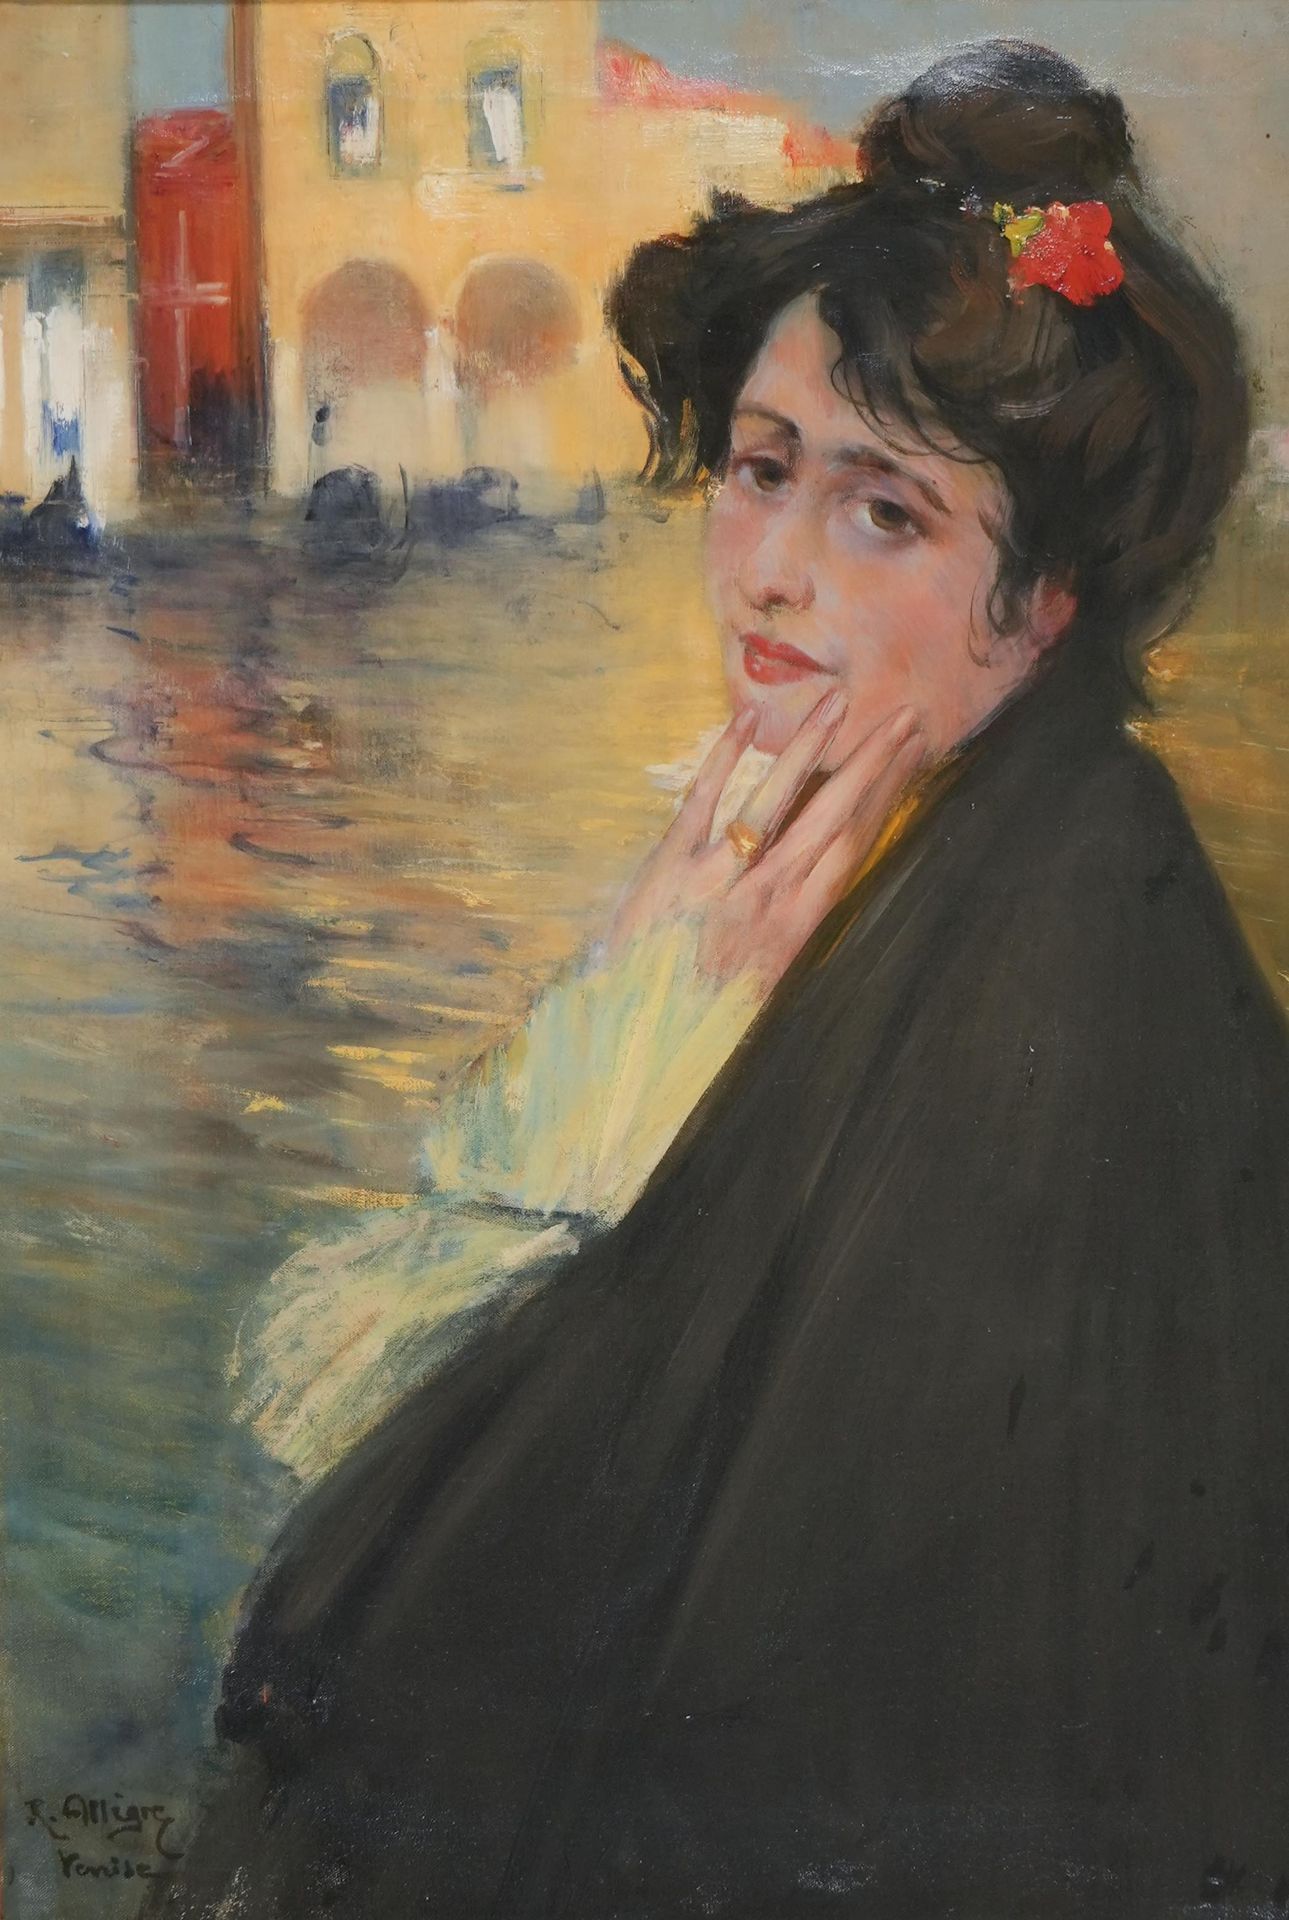 Null 雷蒙-阿尔勒格(1857-1933)
威尼斯女人
布面油画
左下方有签名并注明 "Venise"。
背面有标题和会签
70 x 50厘米